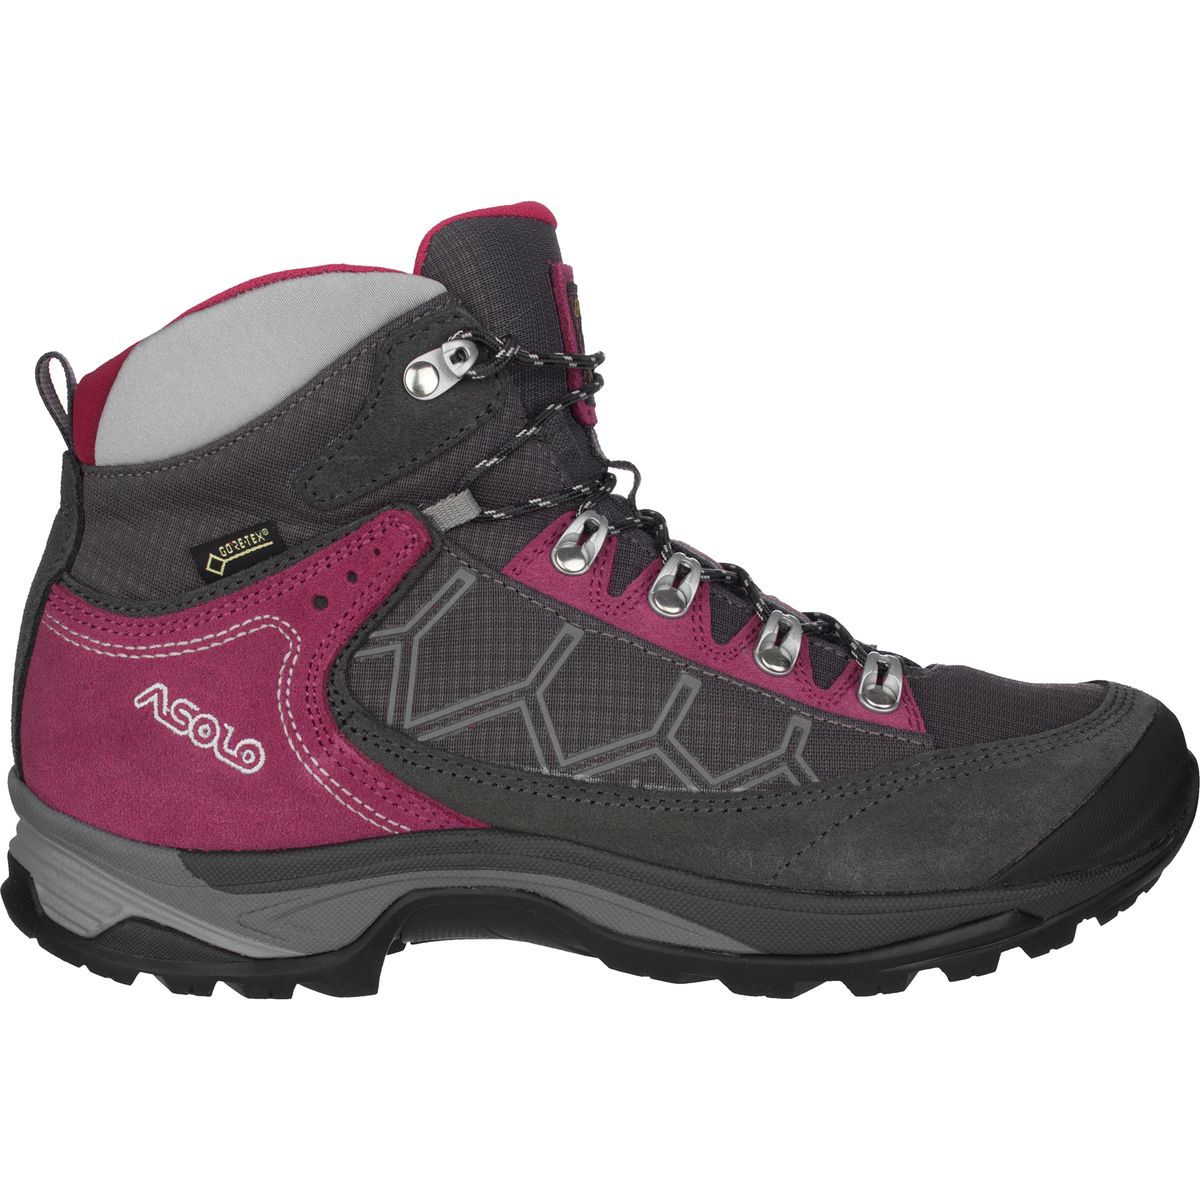 Asolo Falcon GV Hiking Boot - Women's